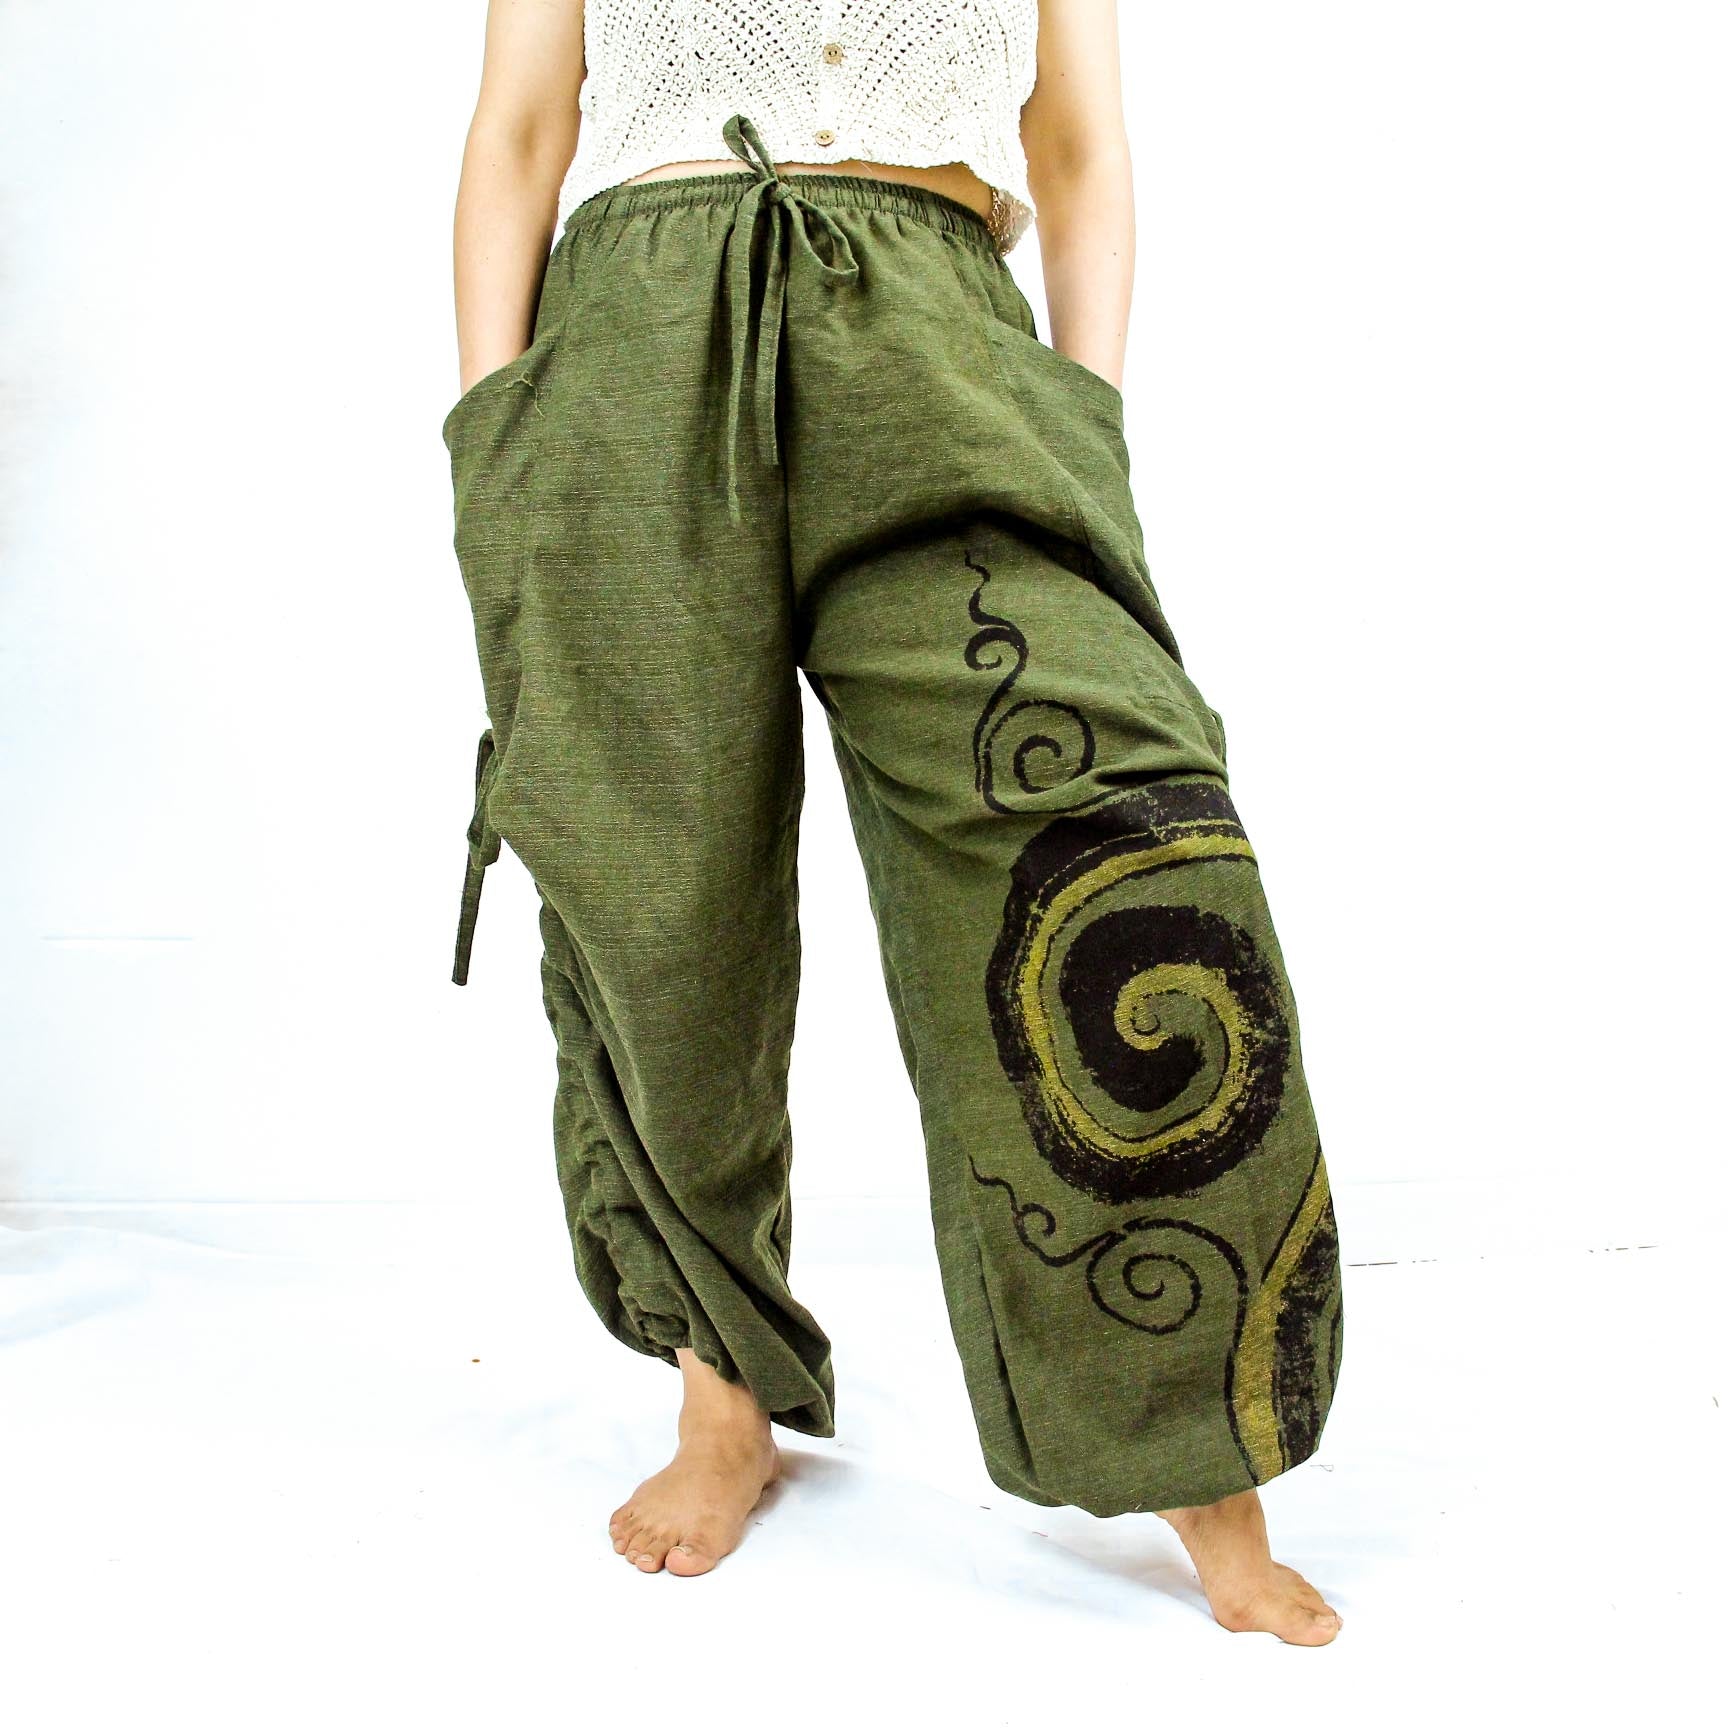 Harem pants pattern on Pinterest